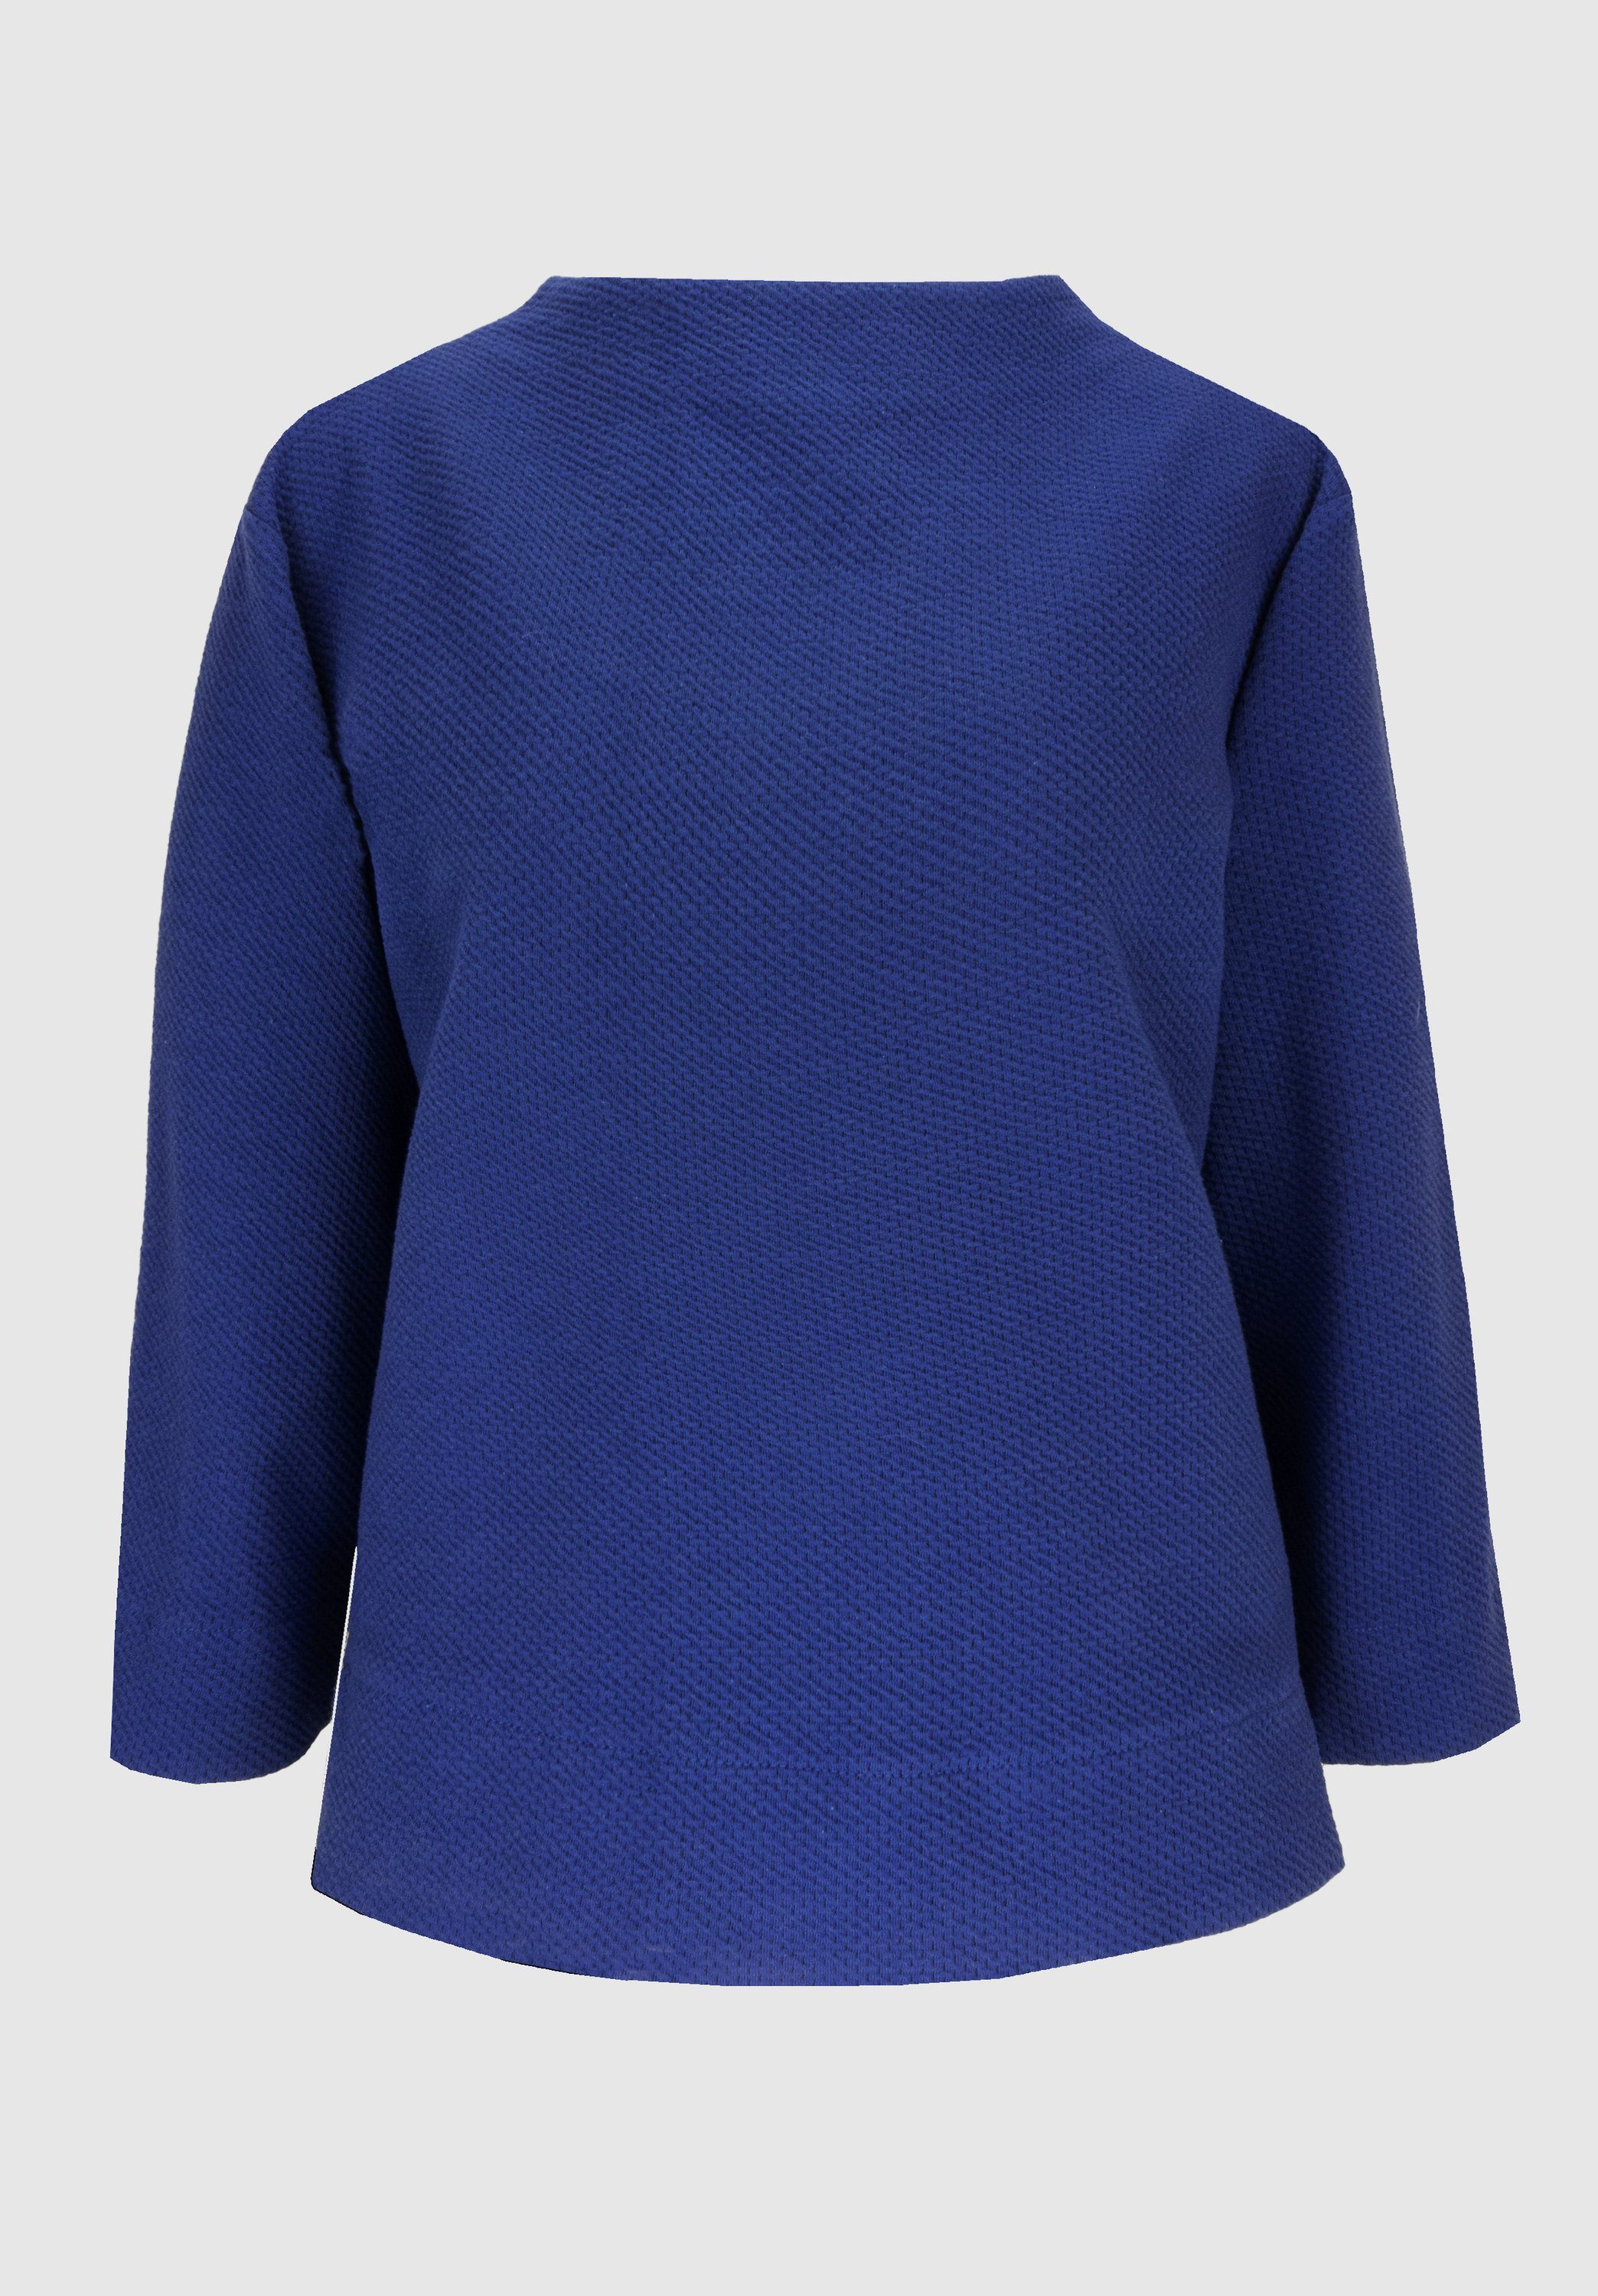 bianca 3/4-Arm-Shirt KYLIN cooles Sweatshirt mit Waffelstruktur Muster starlight